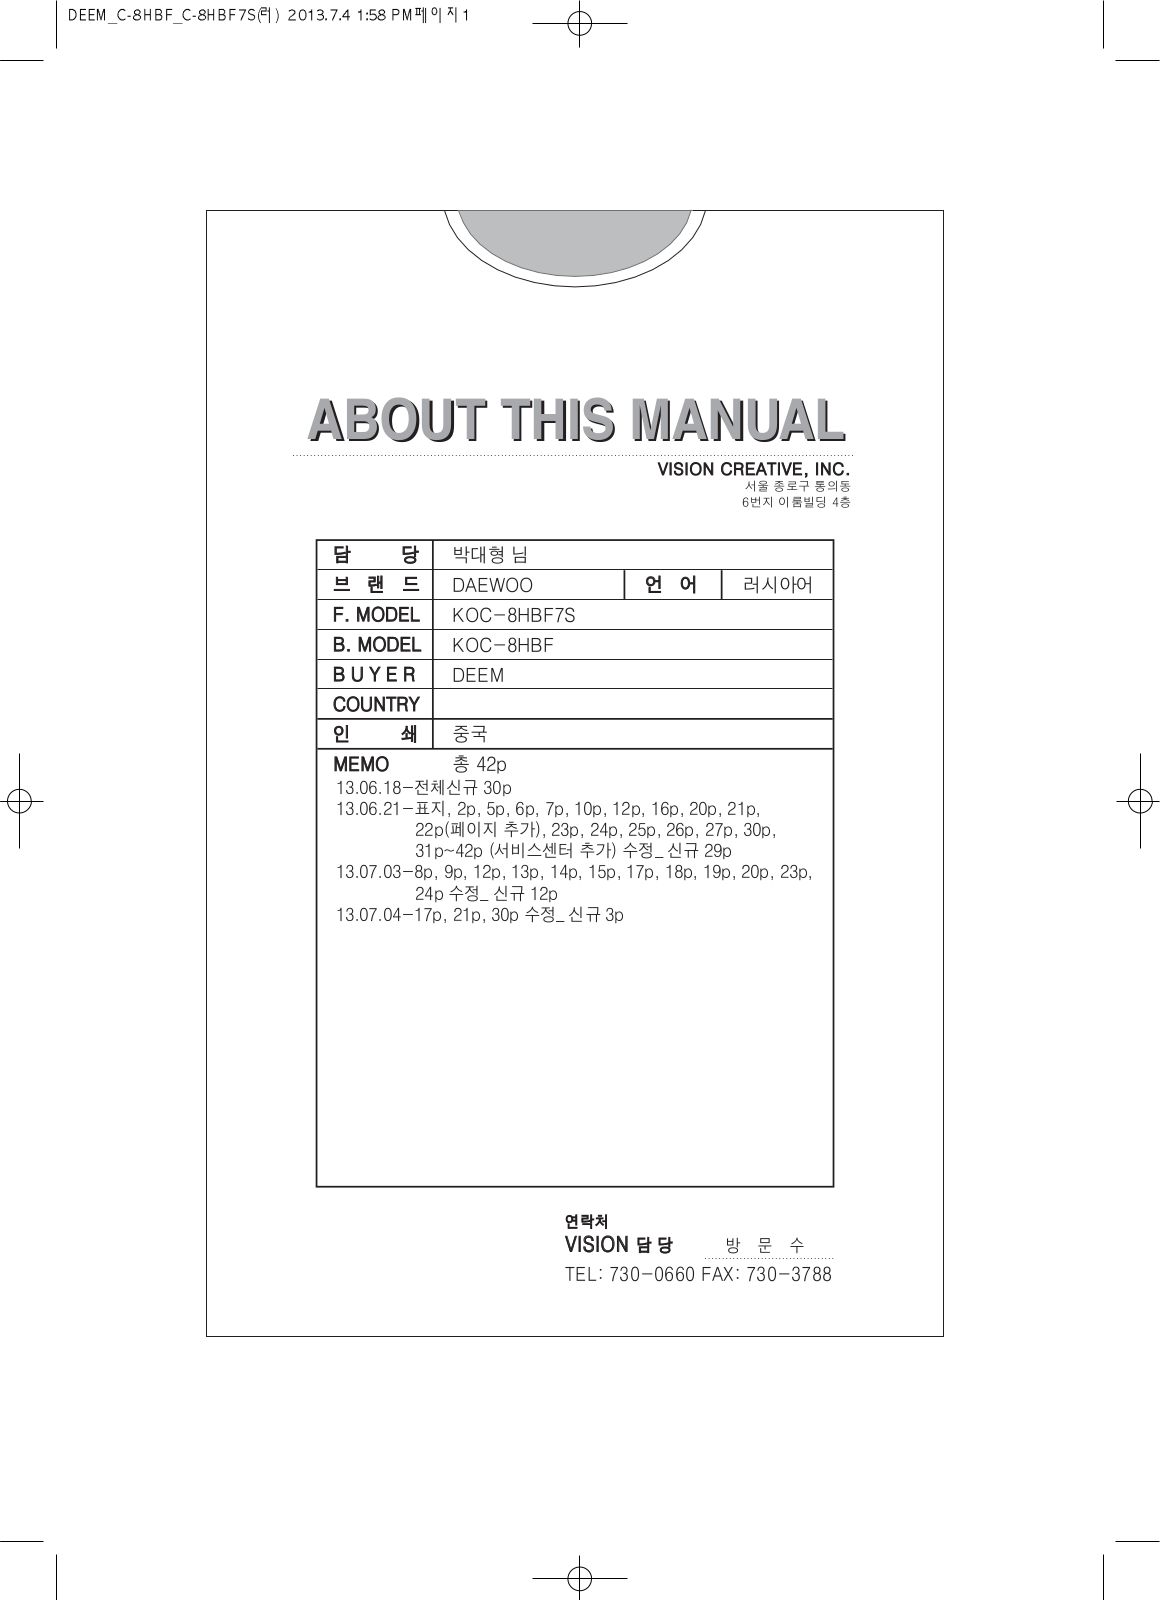 Daewoo KOC-8HBF User Manual